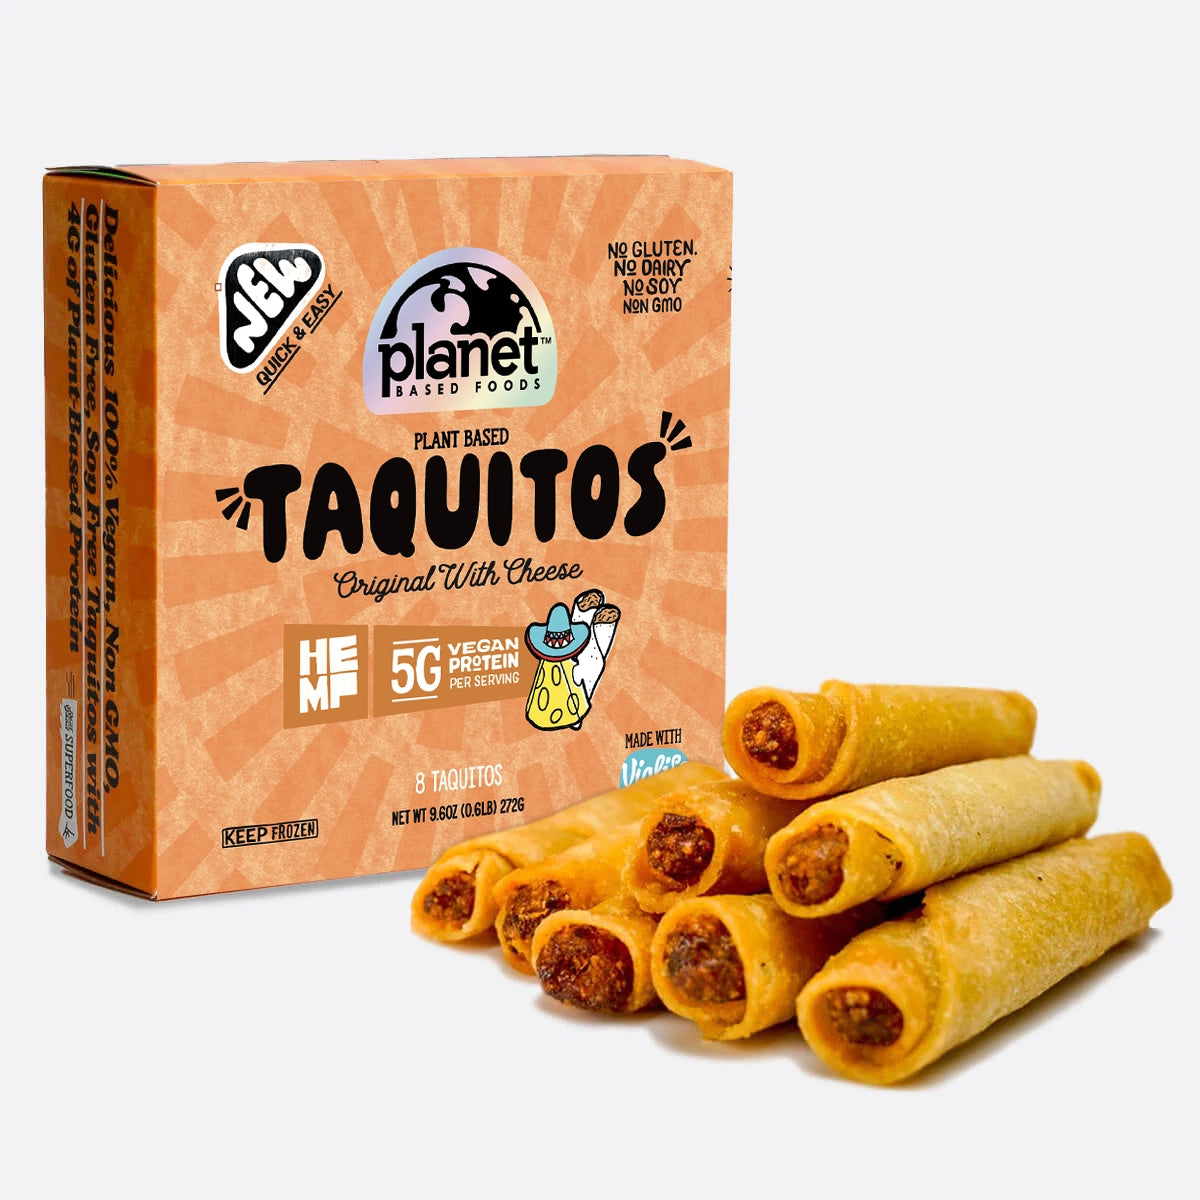 Taquito Original with Cheese